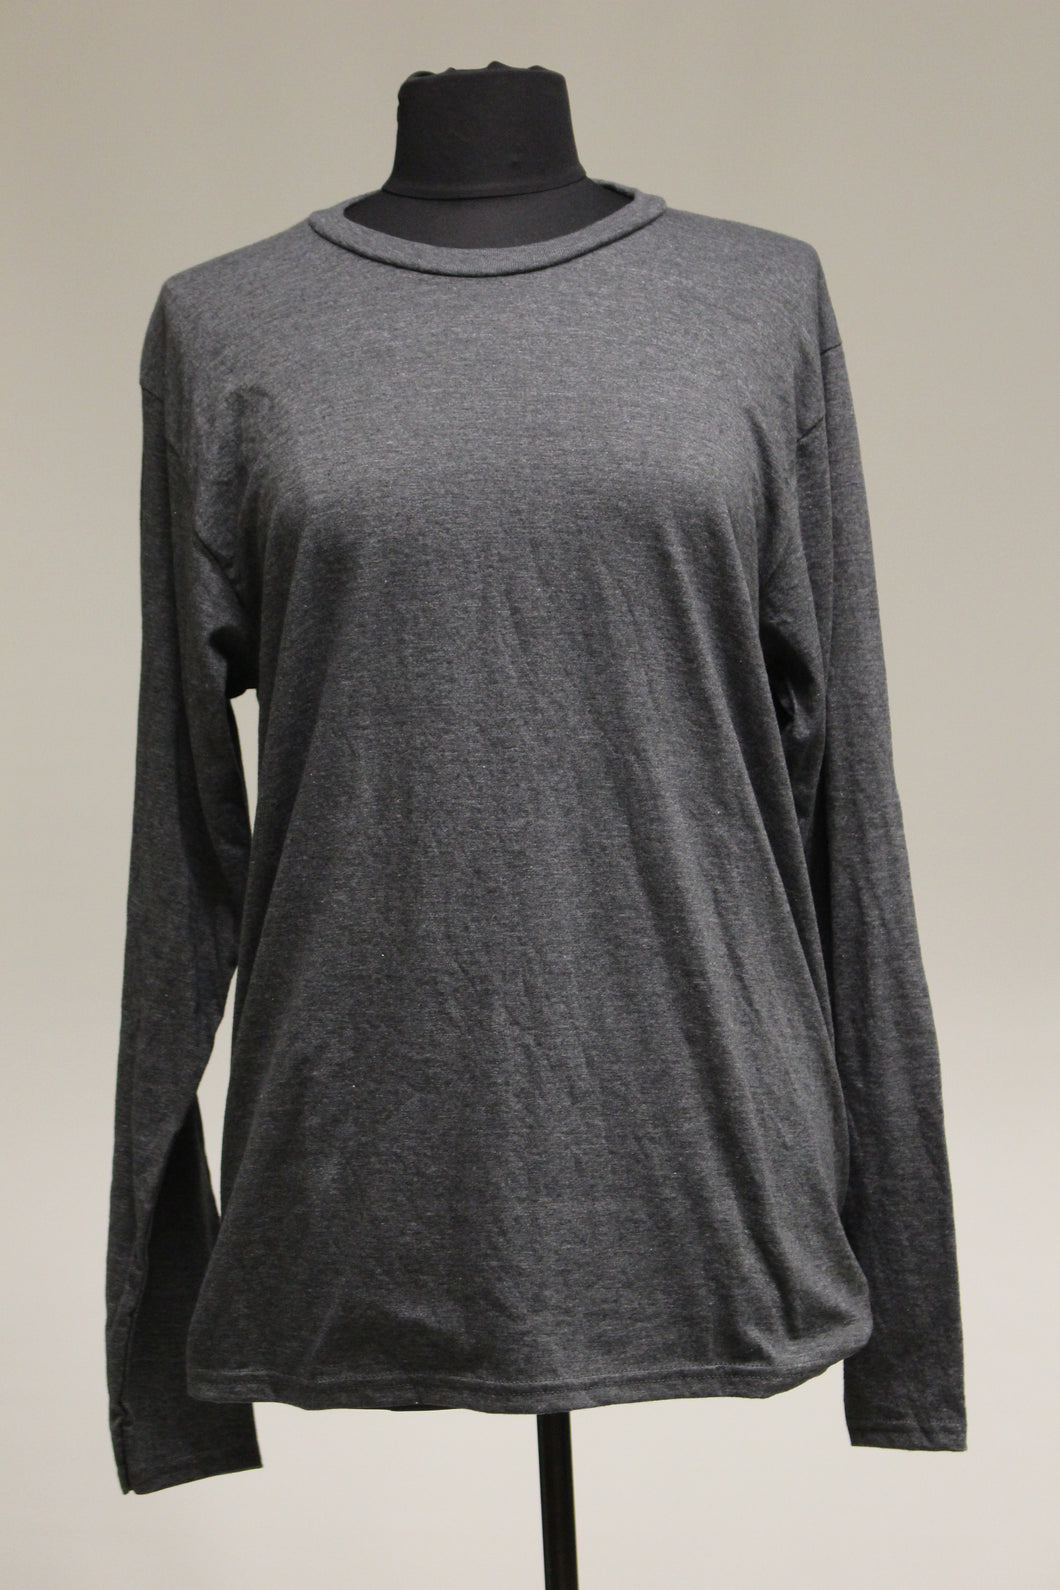 Port & Company Long Sleeve T-Shirt, Dark Gray, Medium